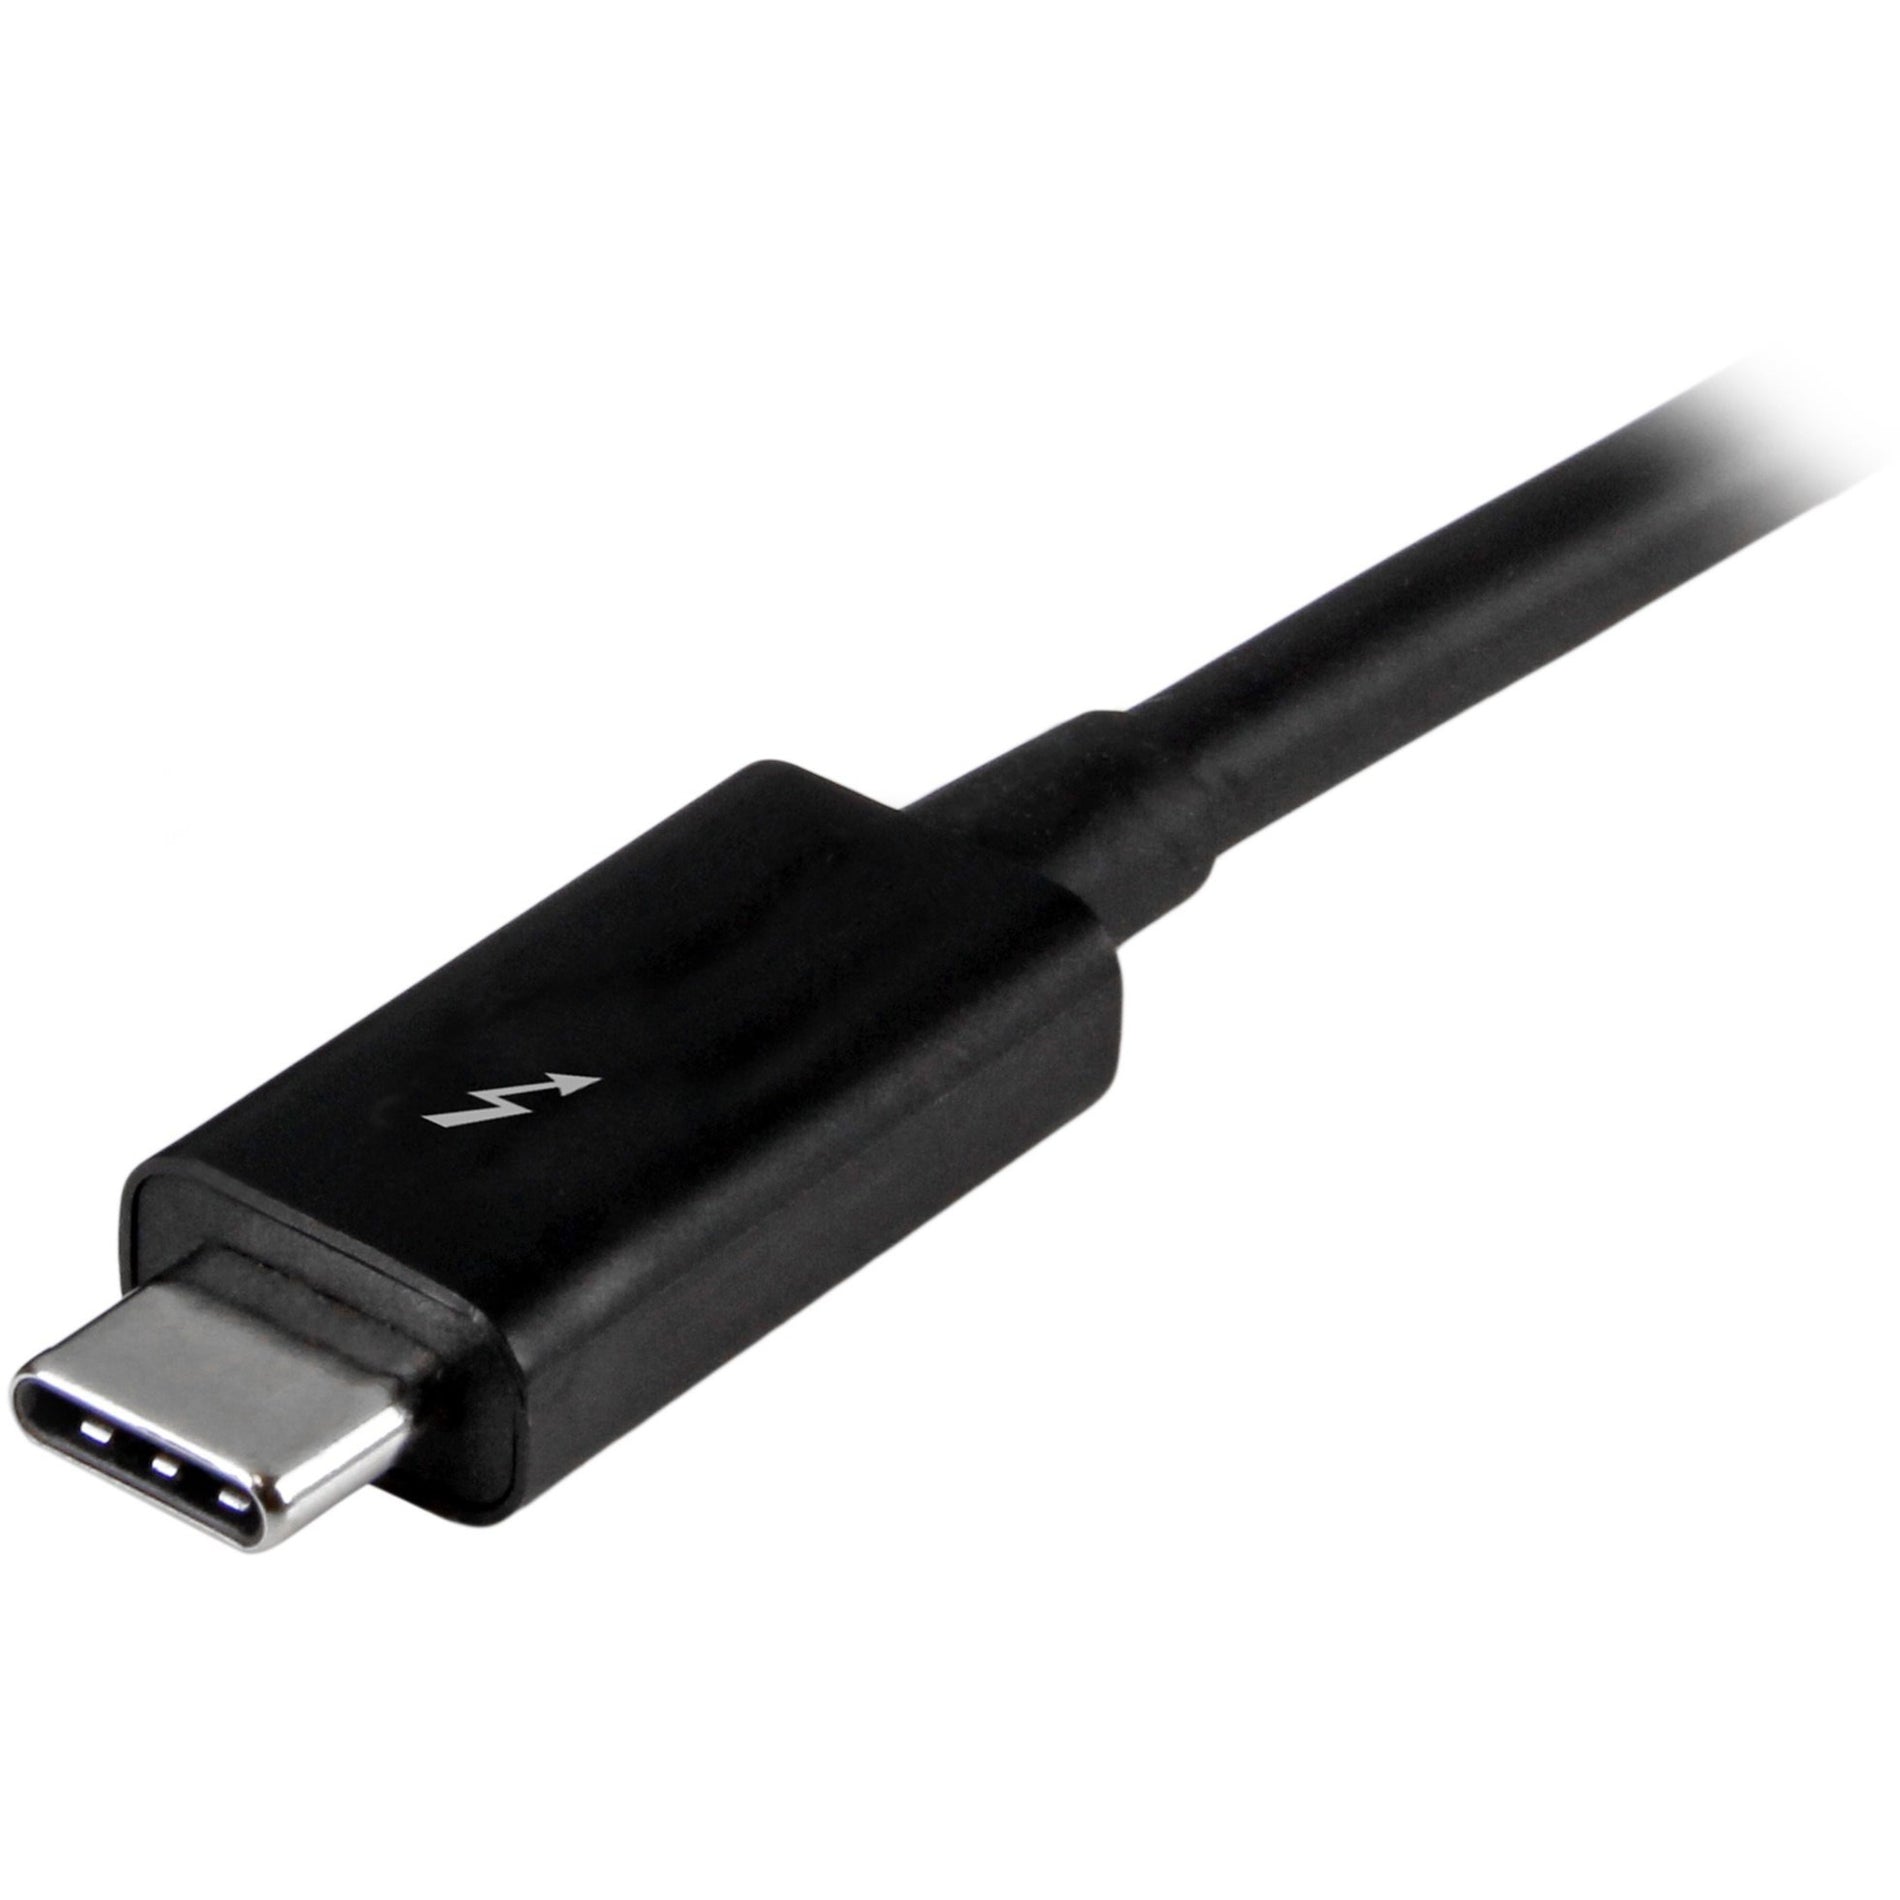 StarTech.com TBLT3MM1M 1m Thunderbolt 3 (20Gbps) USB-C Cable, Thunderbolt, USB, and DisplayPort Compatible